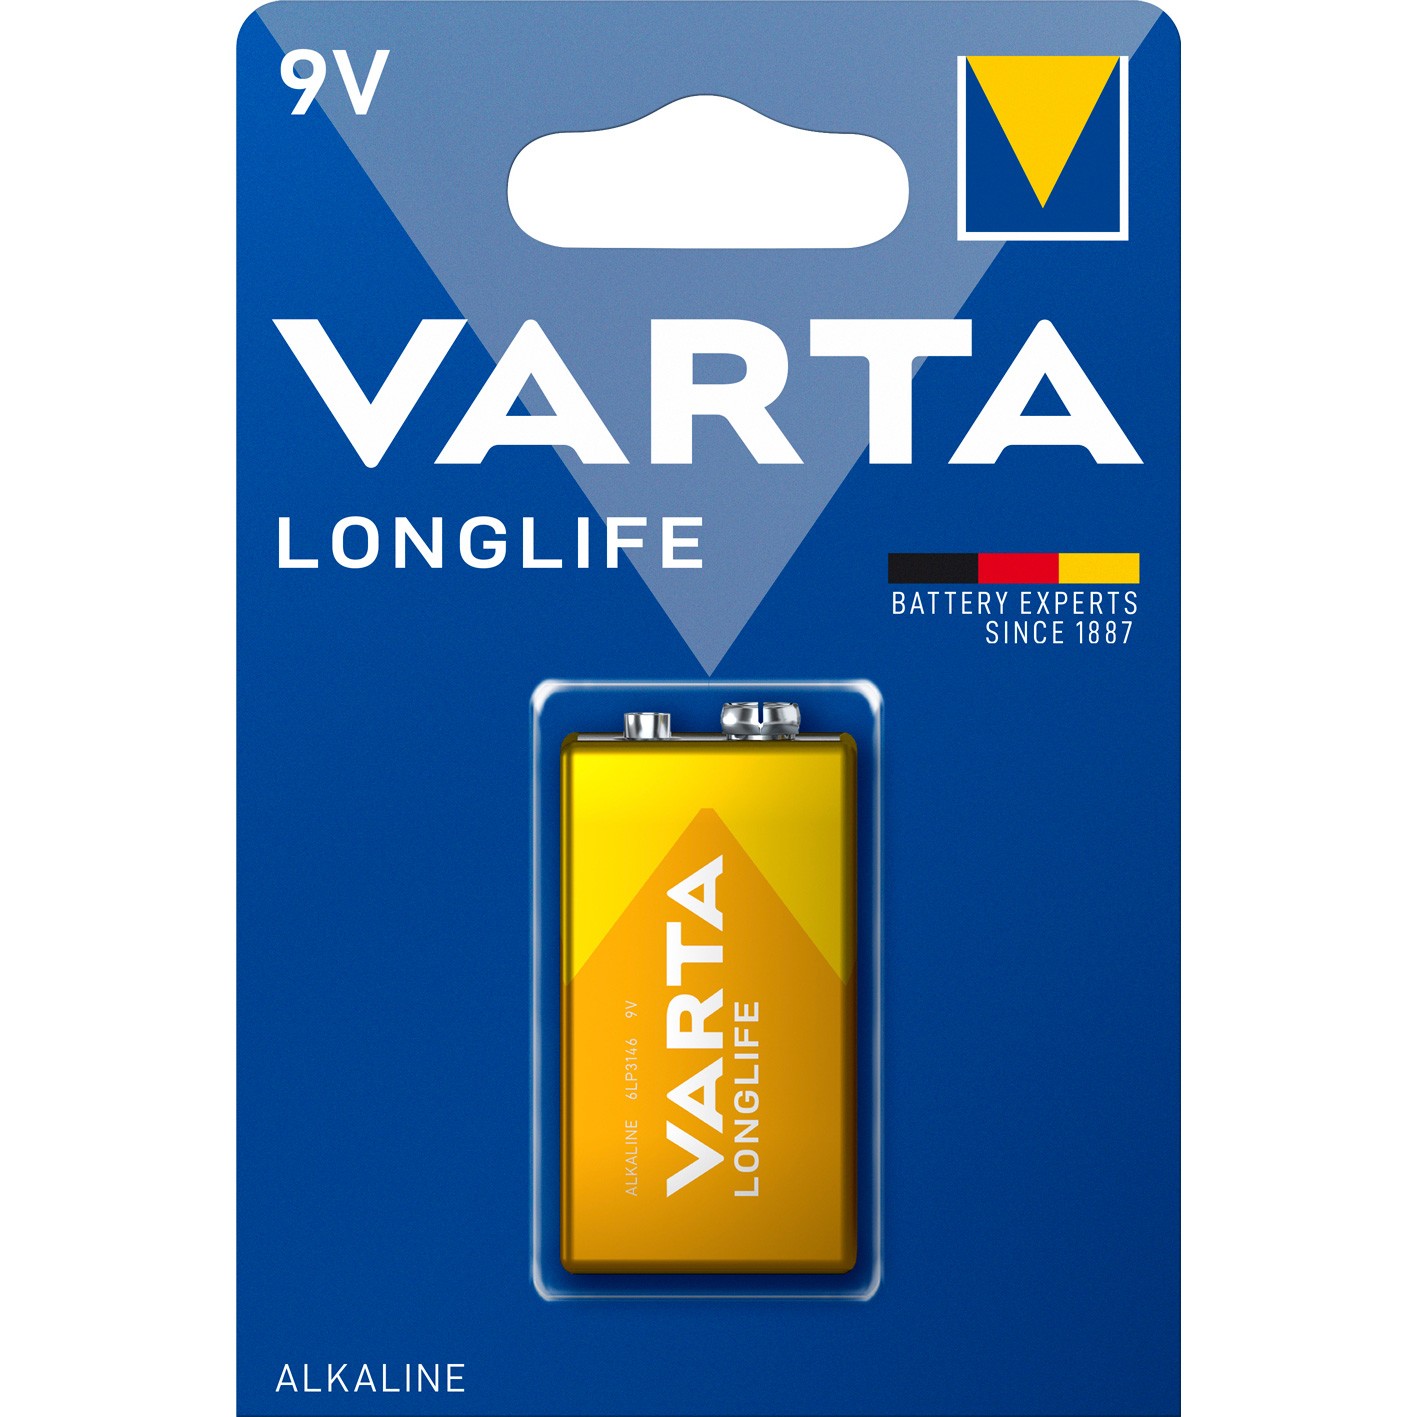 Batteri VARTA Longlife 9V Blisterpak 1 stk. - Daarbak Redoffice A/S